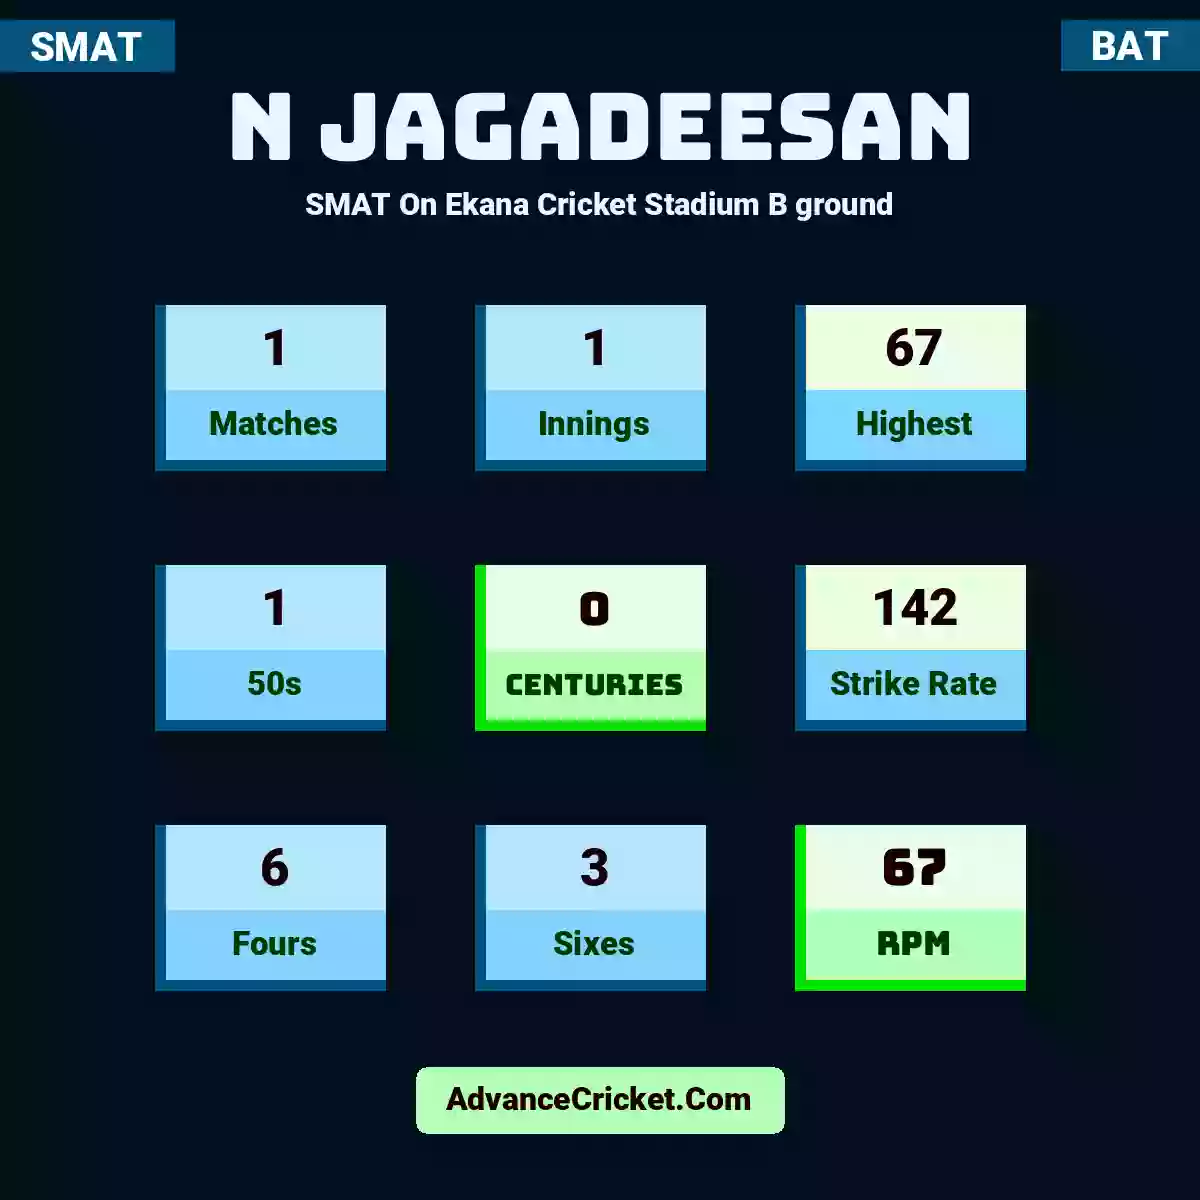 N Jagadeesan SMAT  On Ekana Cricket Stadium B ground, N Jagadeesan played 1 matches, scored 67 runs as highest, 1 half-centuries, and 0 centuries, with a strike rate of 142. N.Jagadeesan hit 6 fours and 3 sixes, with an RPM of 67.